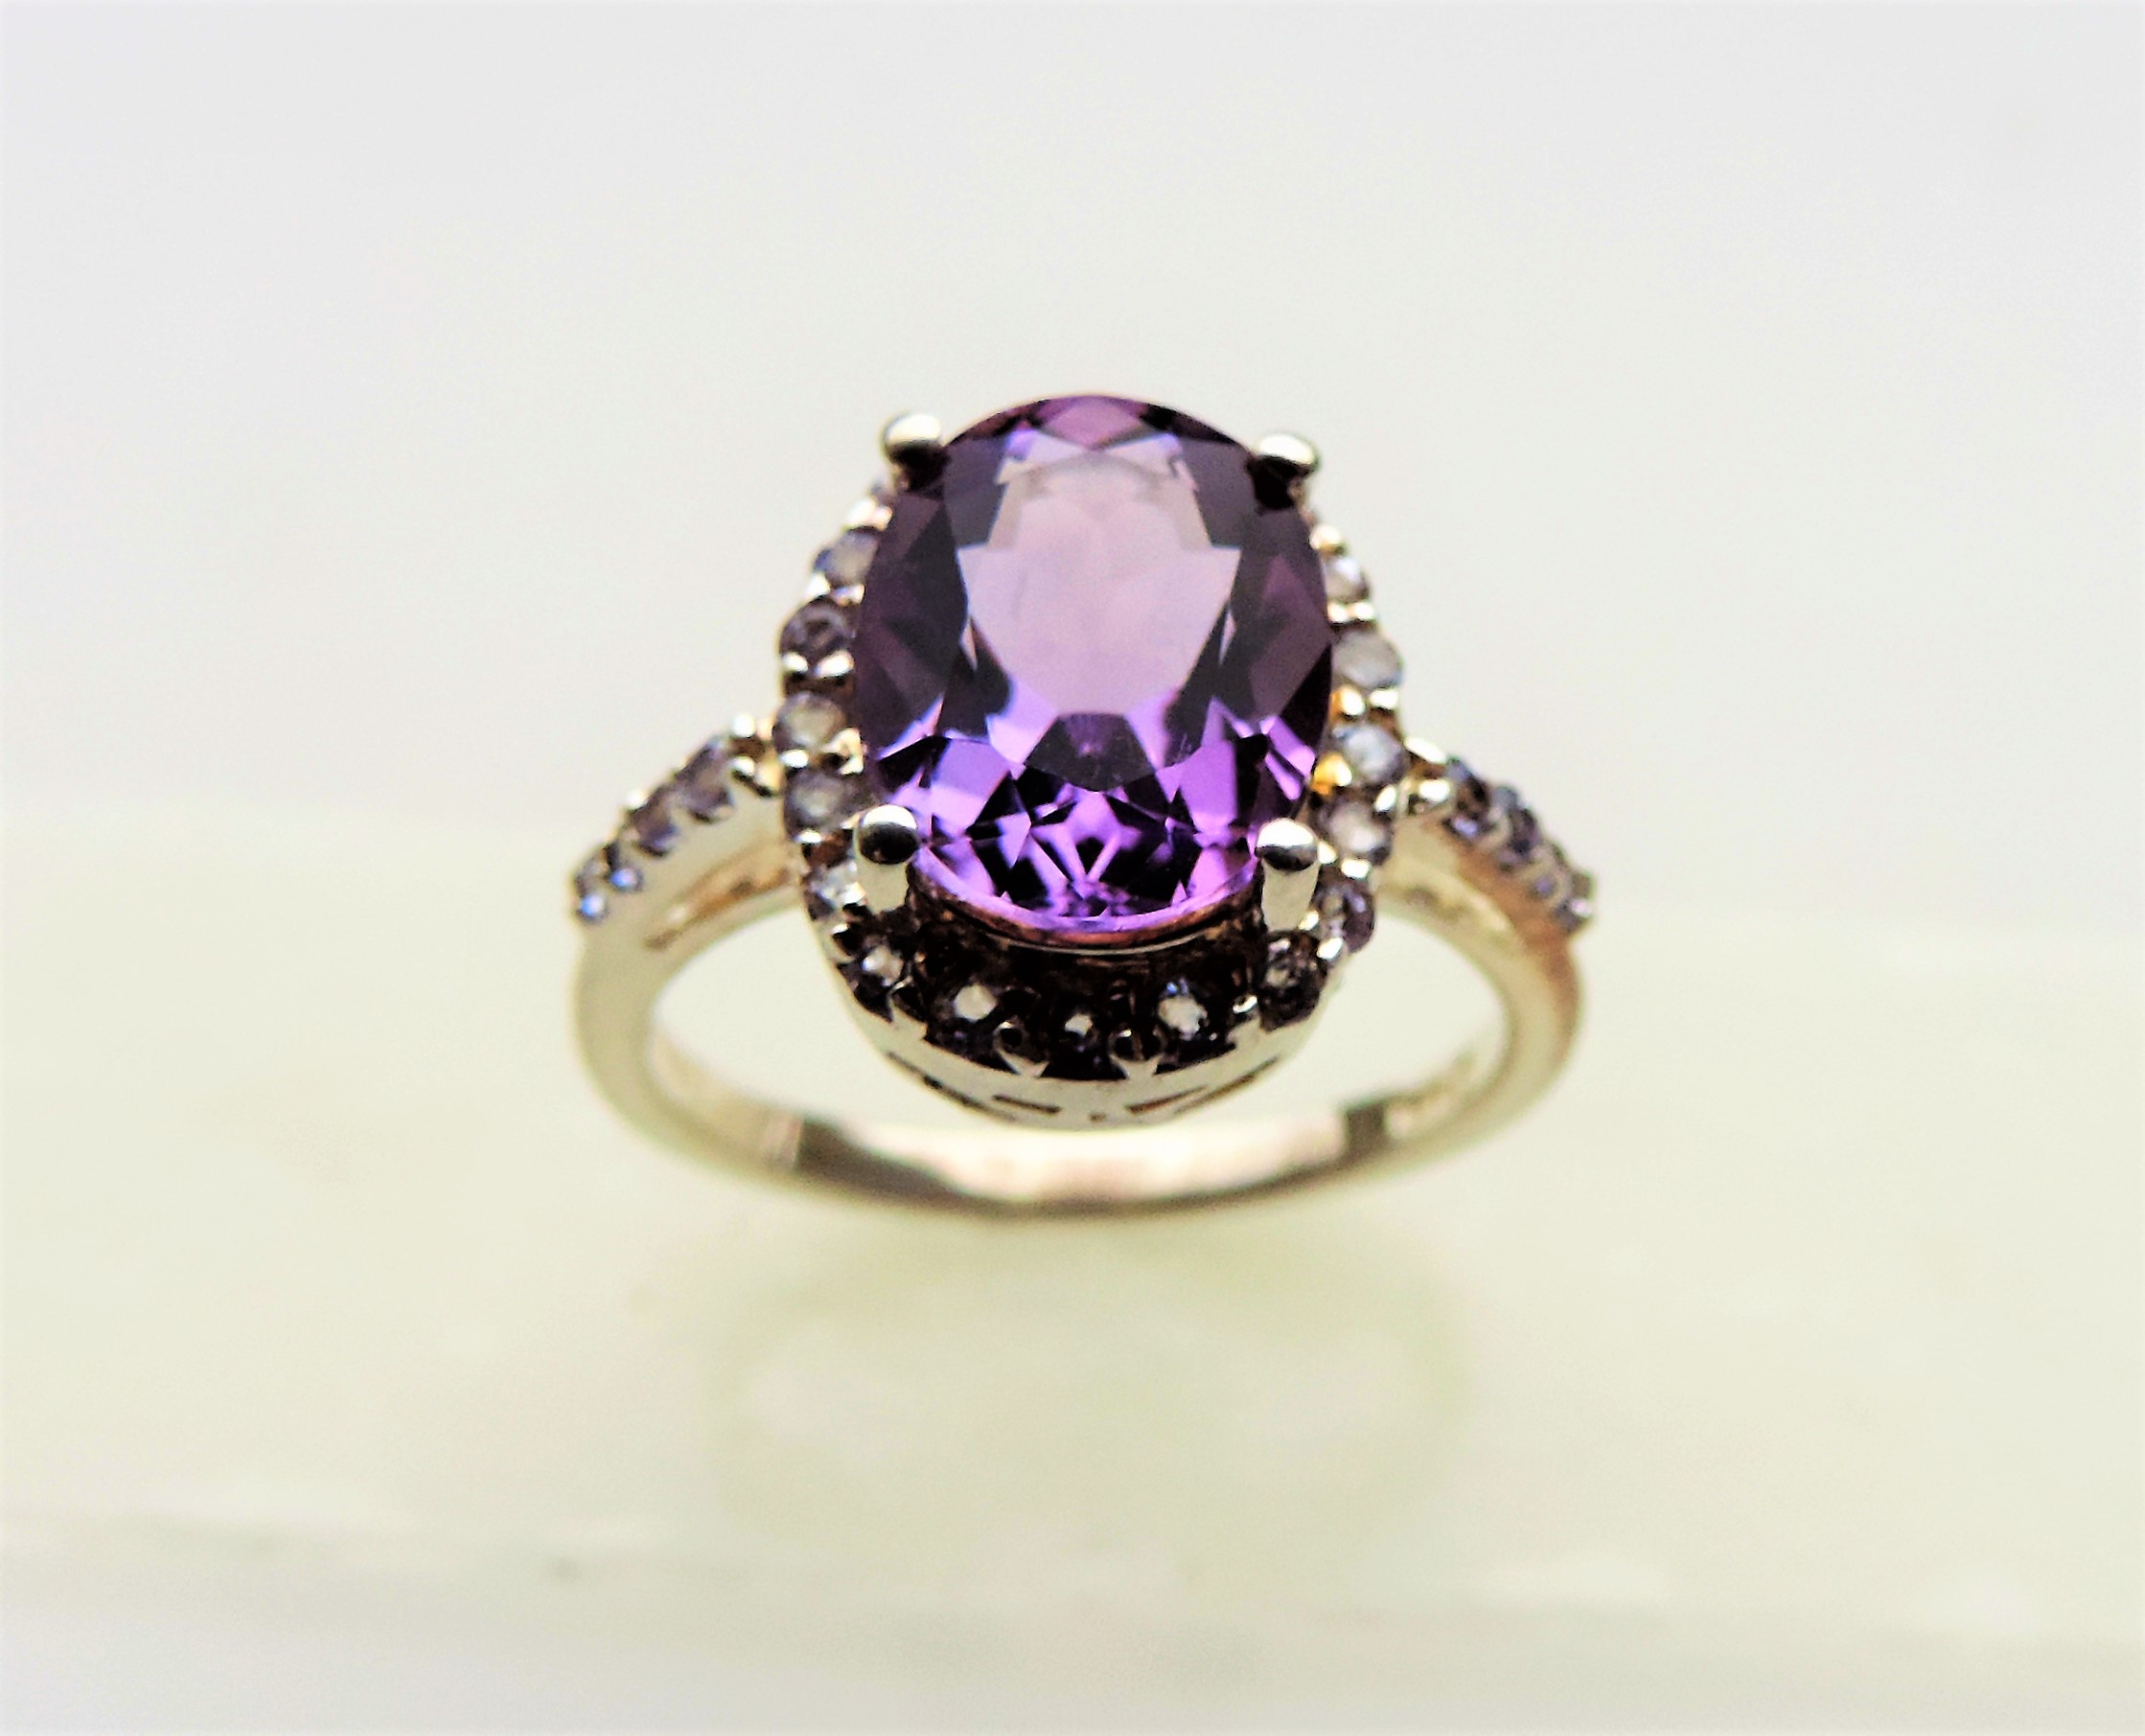 2.4 carat Amethyst & Diamond Ring - Image 2 of 6